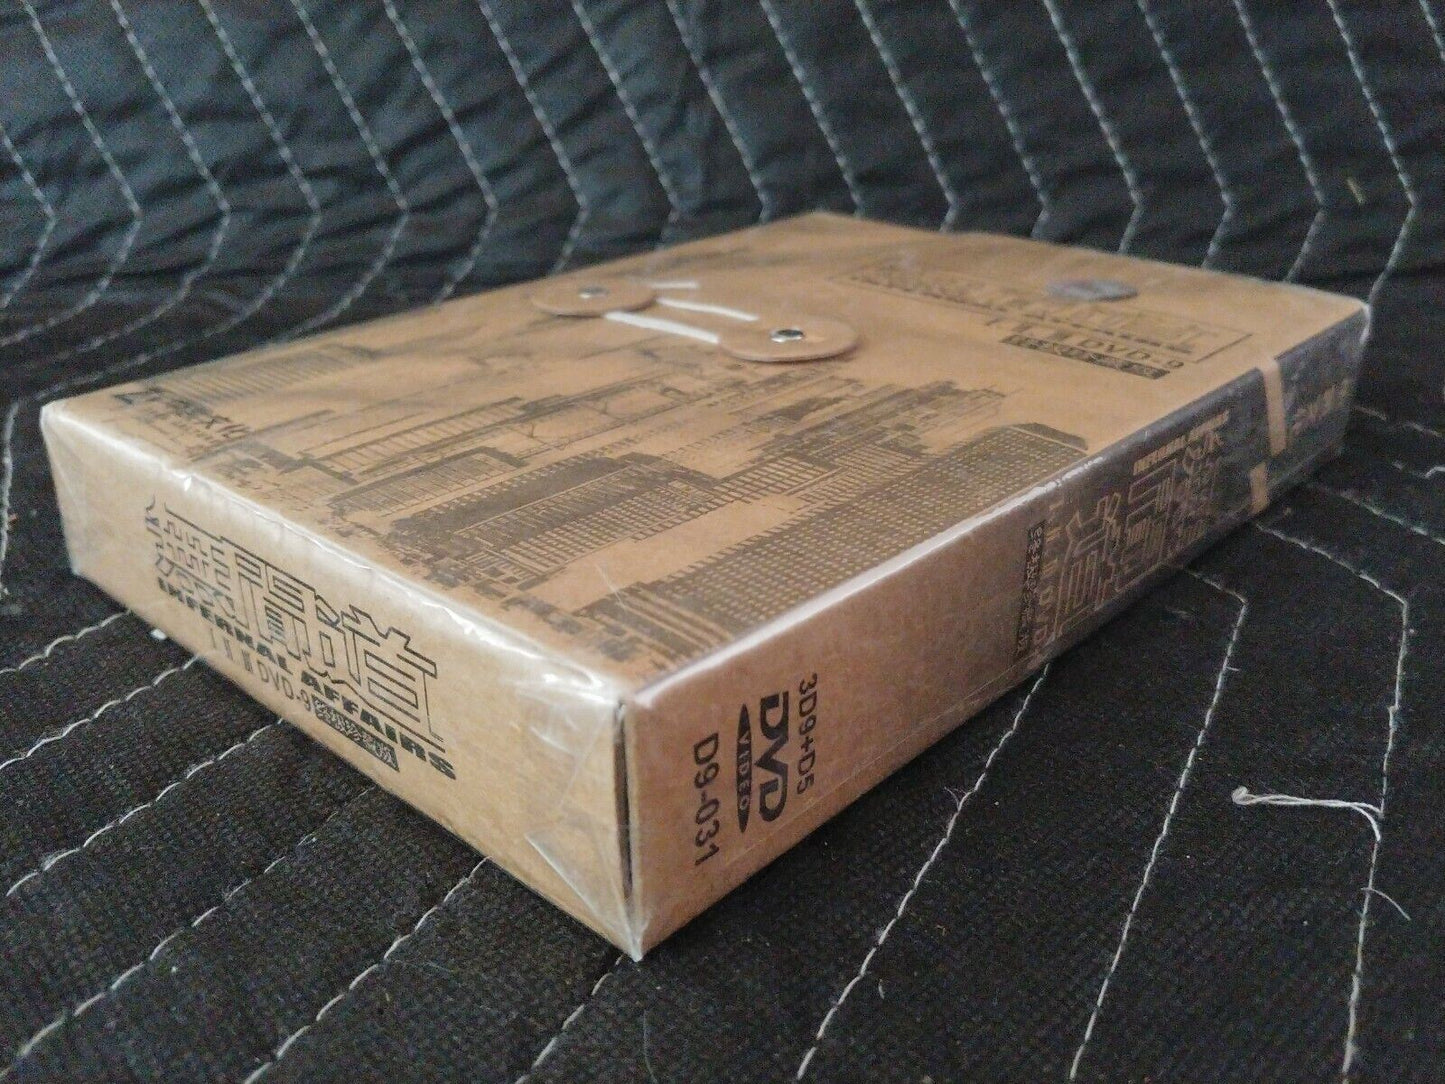 Infernal Affairs Trilogy DVD-9 Box Set - Rare Import Edition - 3 Seasons + Bonus